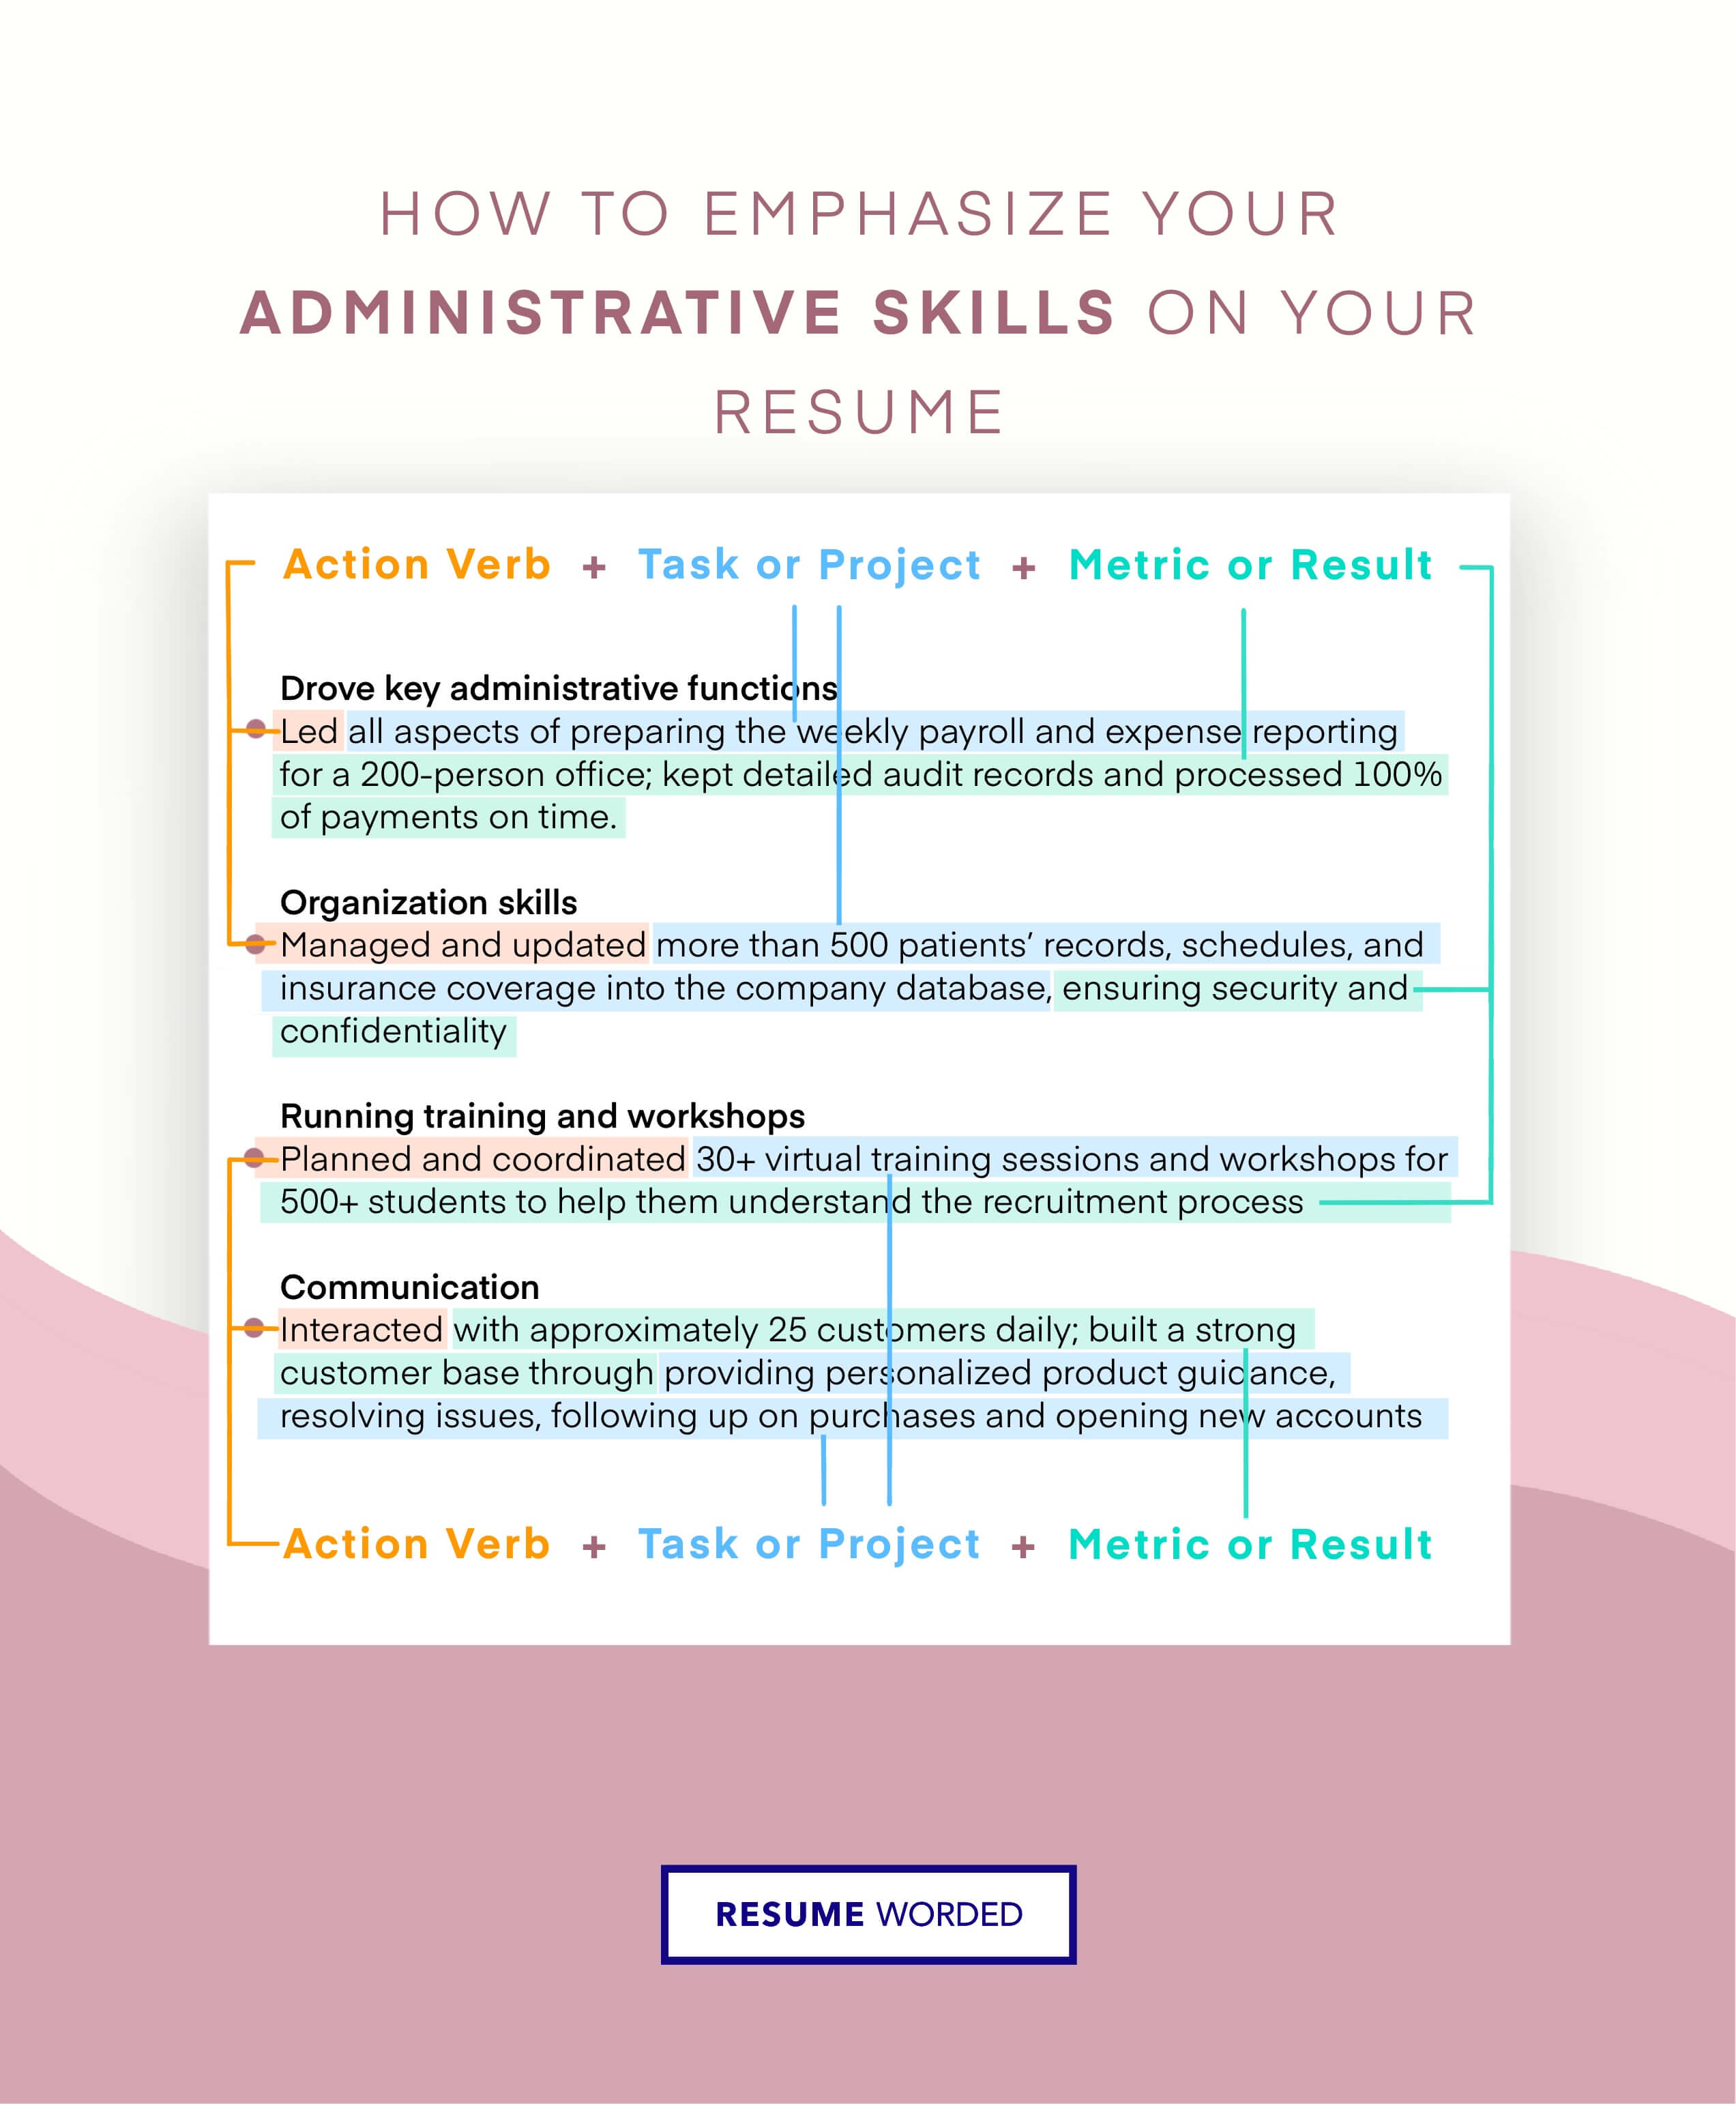 Showcase your administrative skills - Surgery Scheduler CV